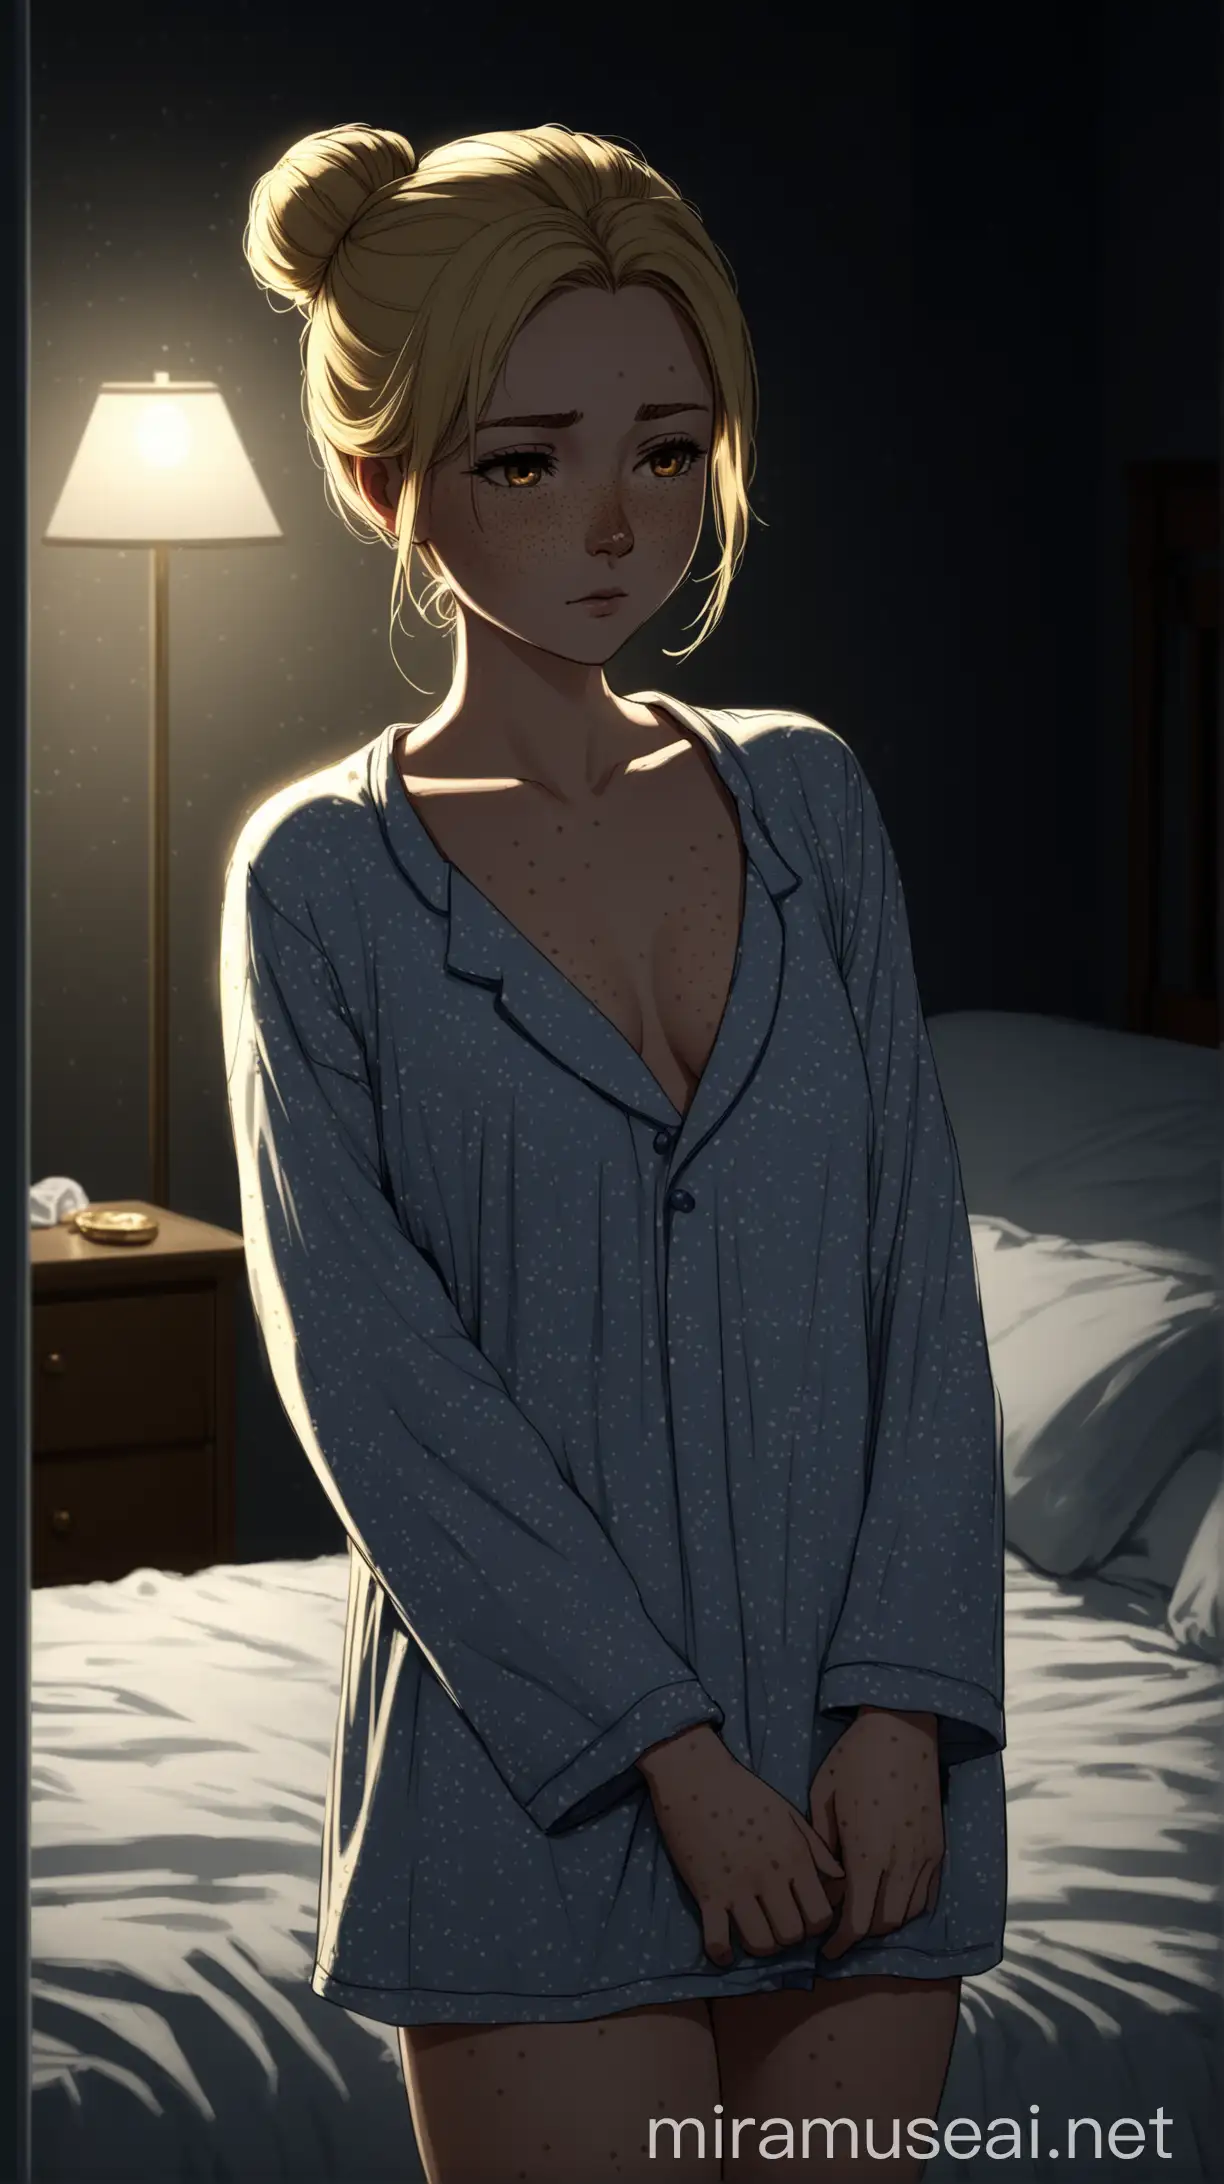 Blonde Woman with Freckles in Cozy Nightwear Pose in Dark Bedroom